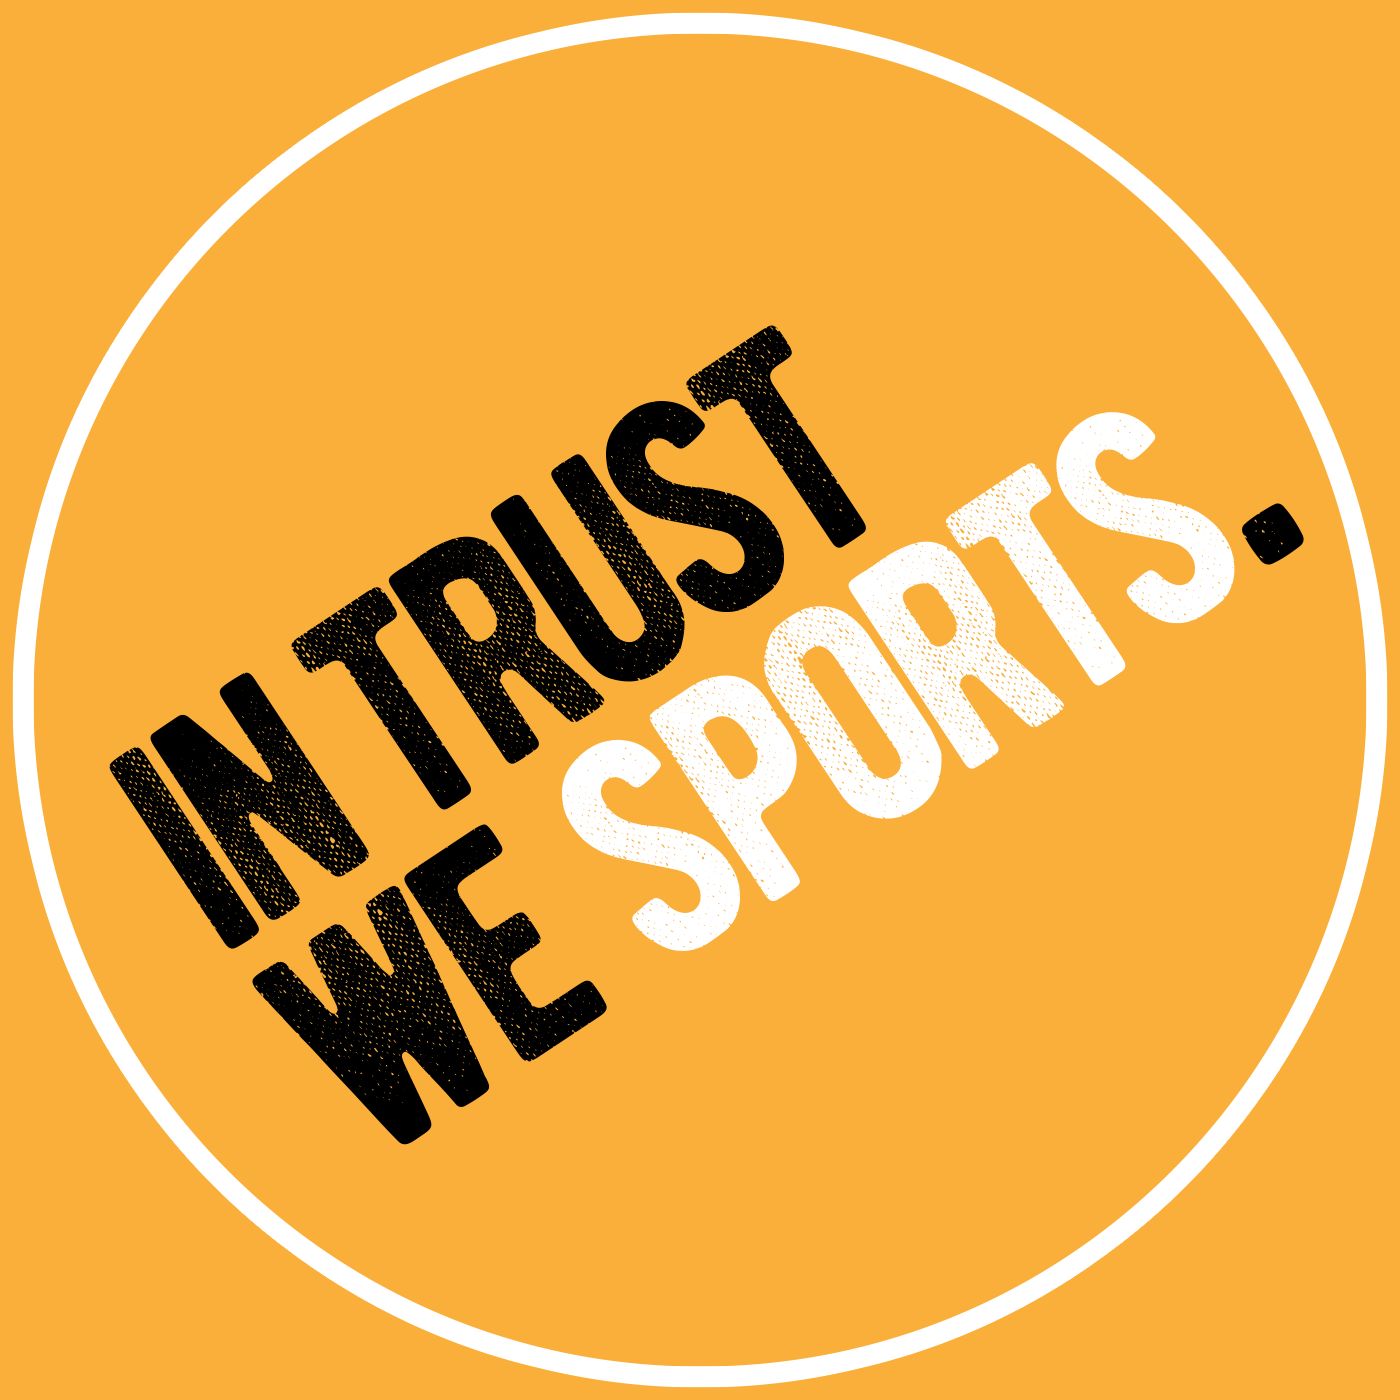 In Trust We Sports